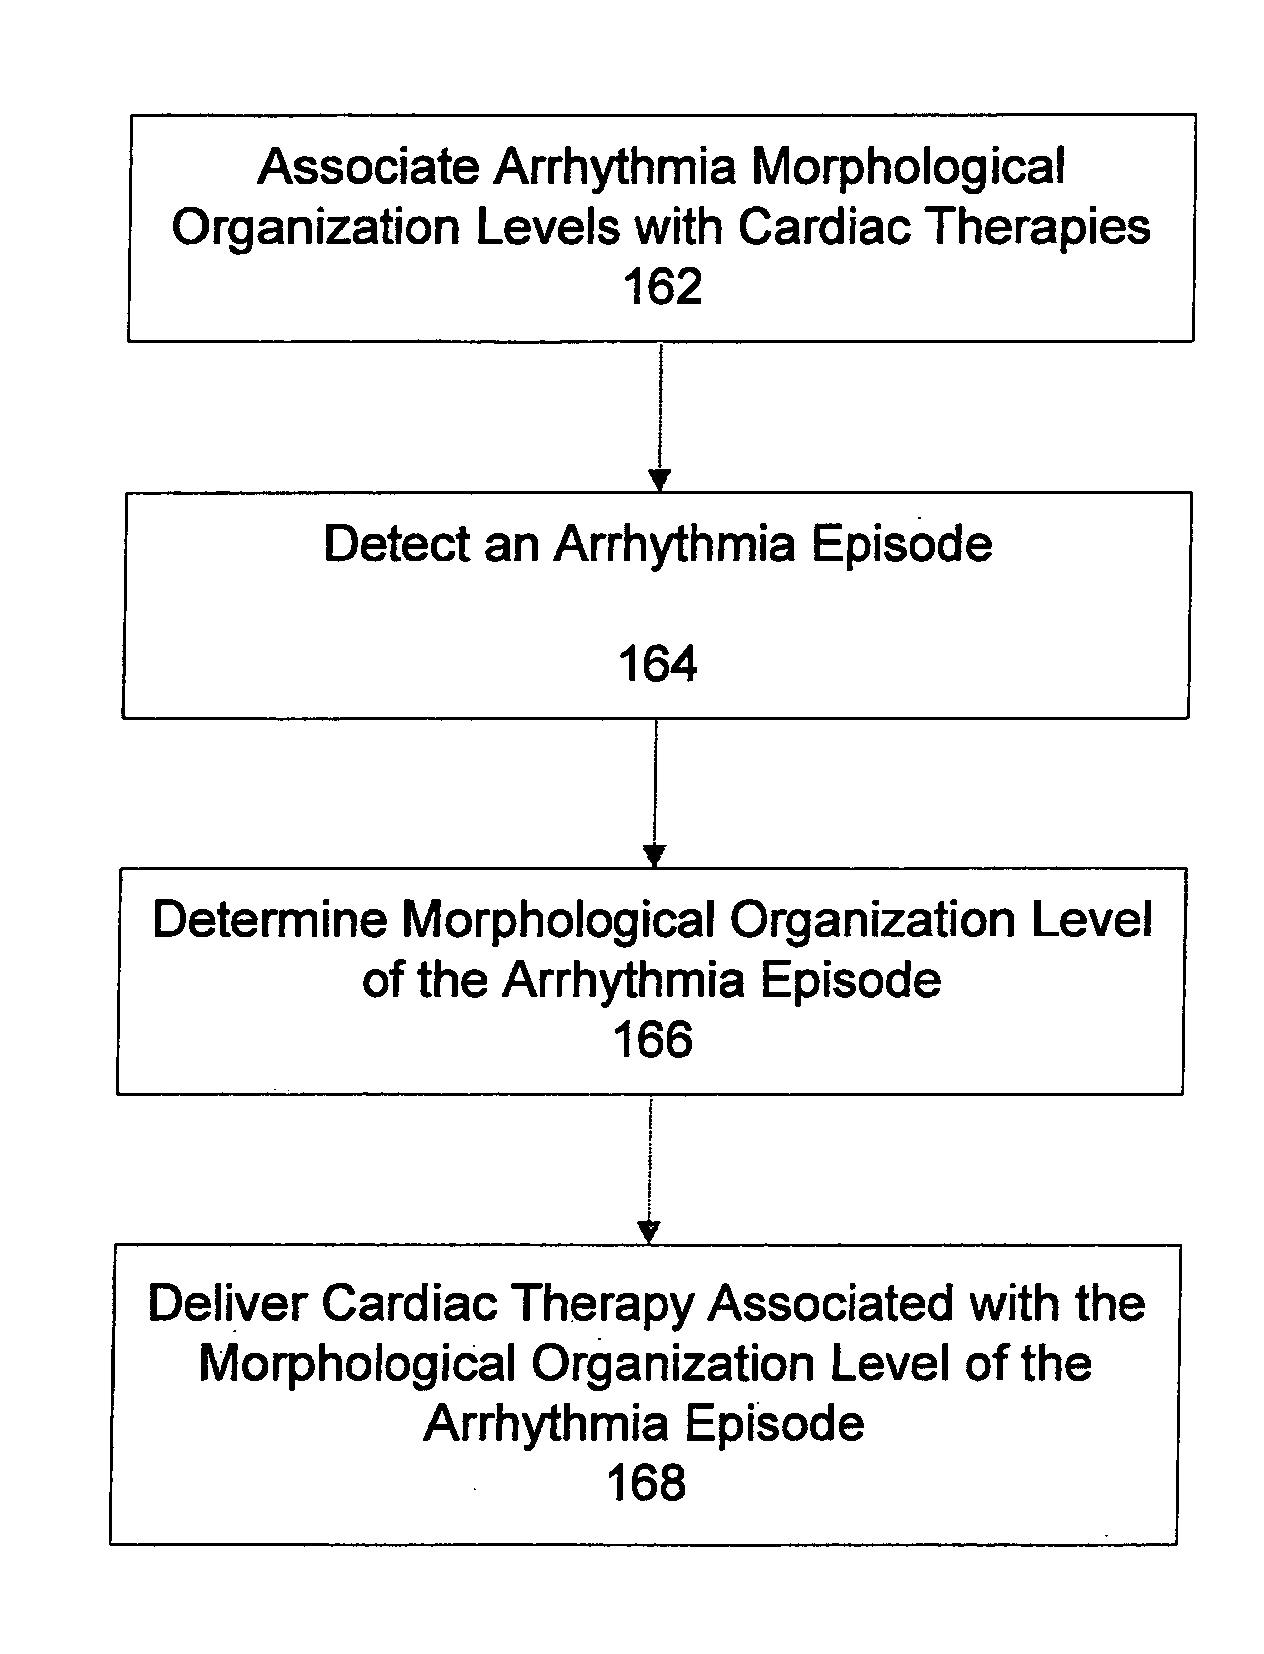 Automatic multi-level therapy based on morphologic organization of an arrhythmia